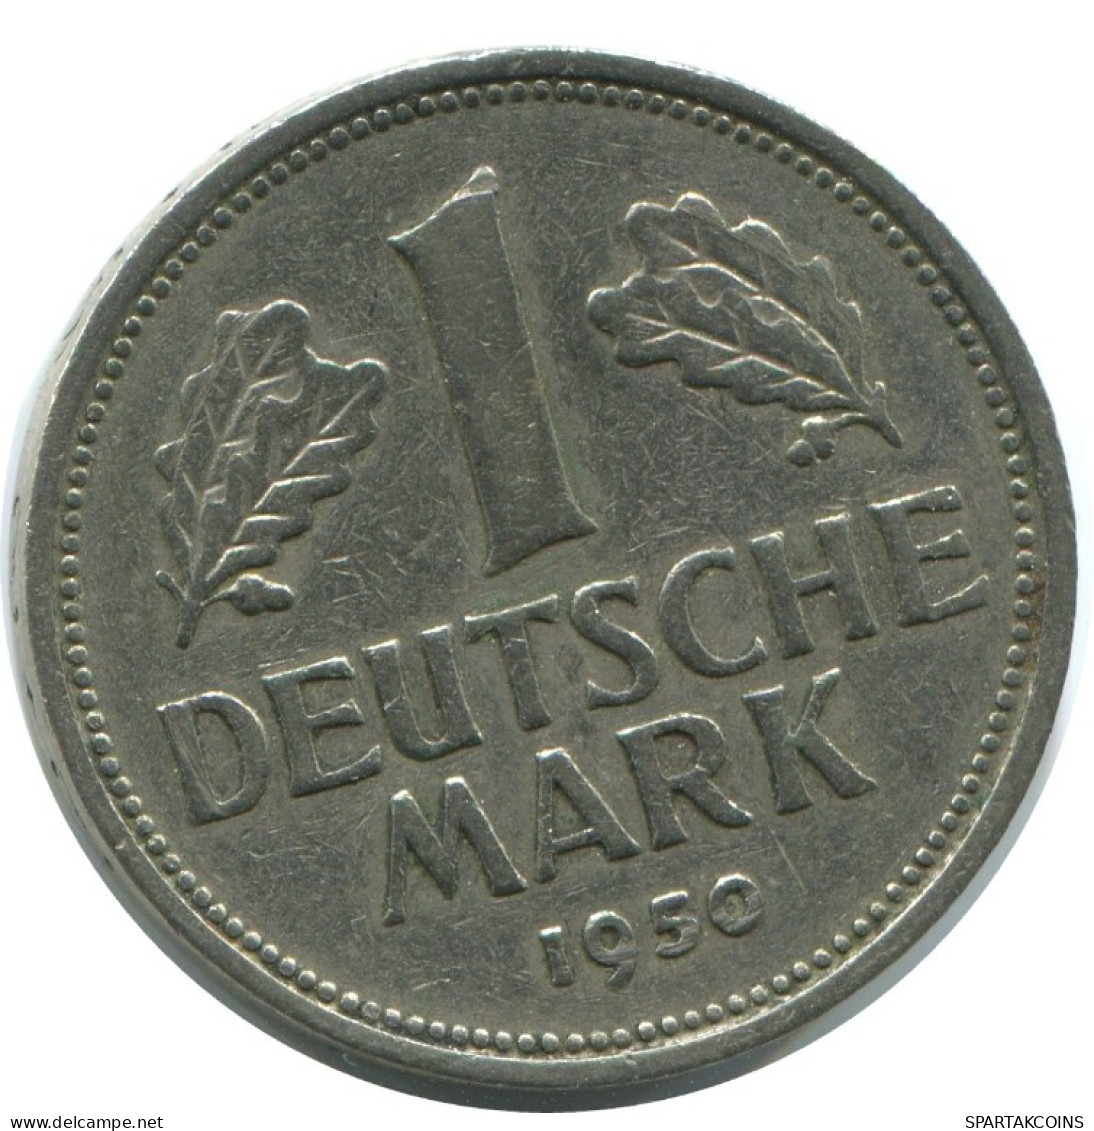 1 DM 1950 J BRD ALEMANIA Moneda GERMANY #AG295.3.E.A - 1 Mark